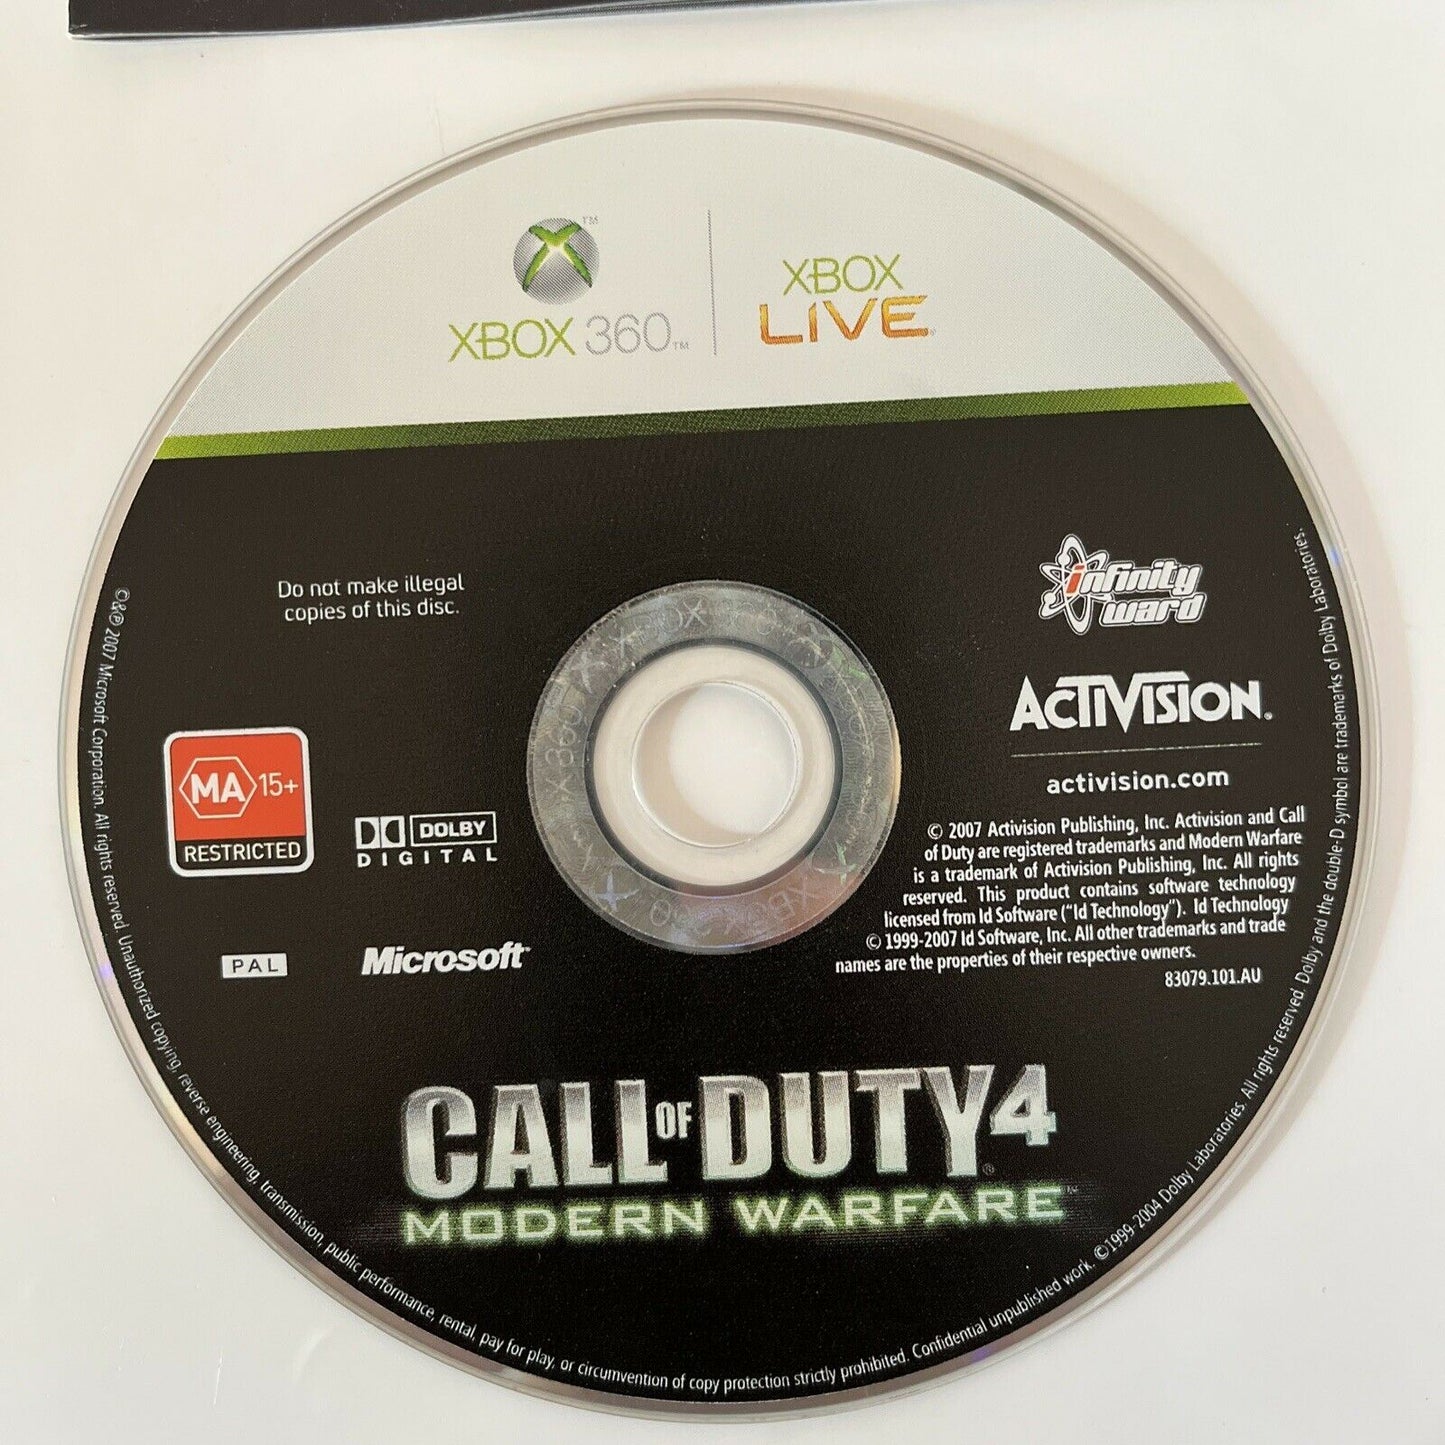 Call of Duty 4: Modern Warfare - Microsoft XBOX 360 PAL Game with Manual